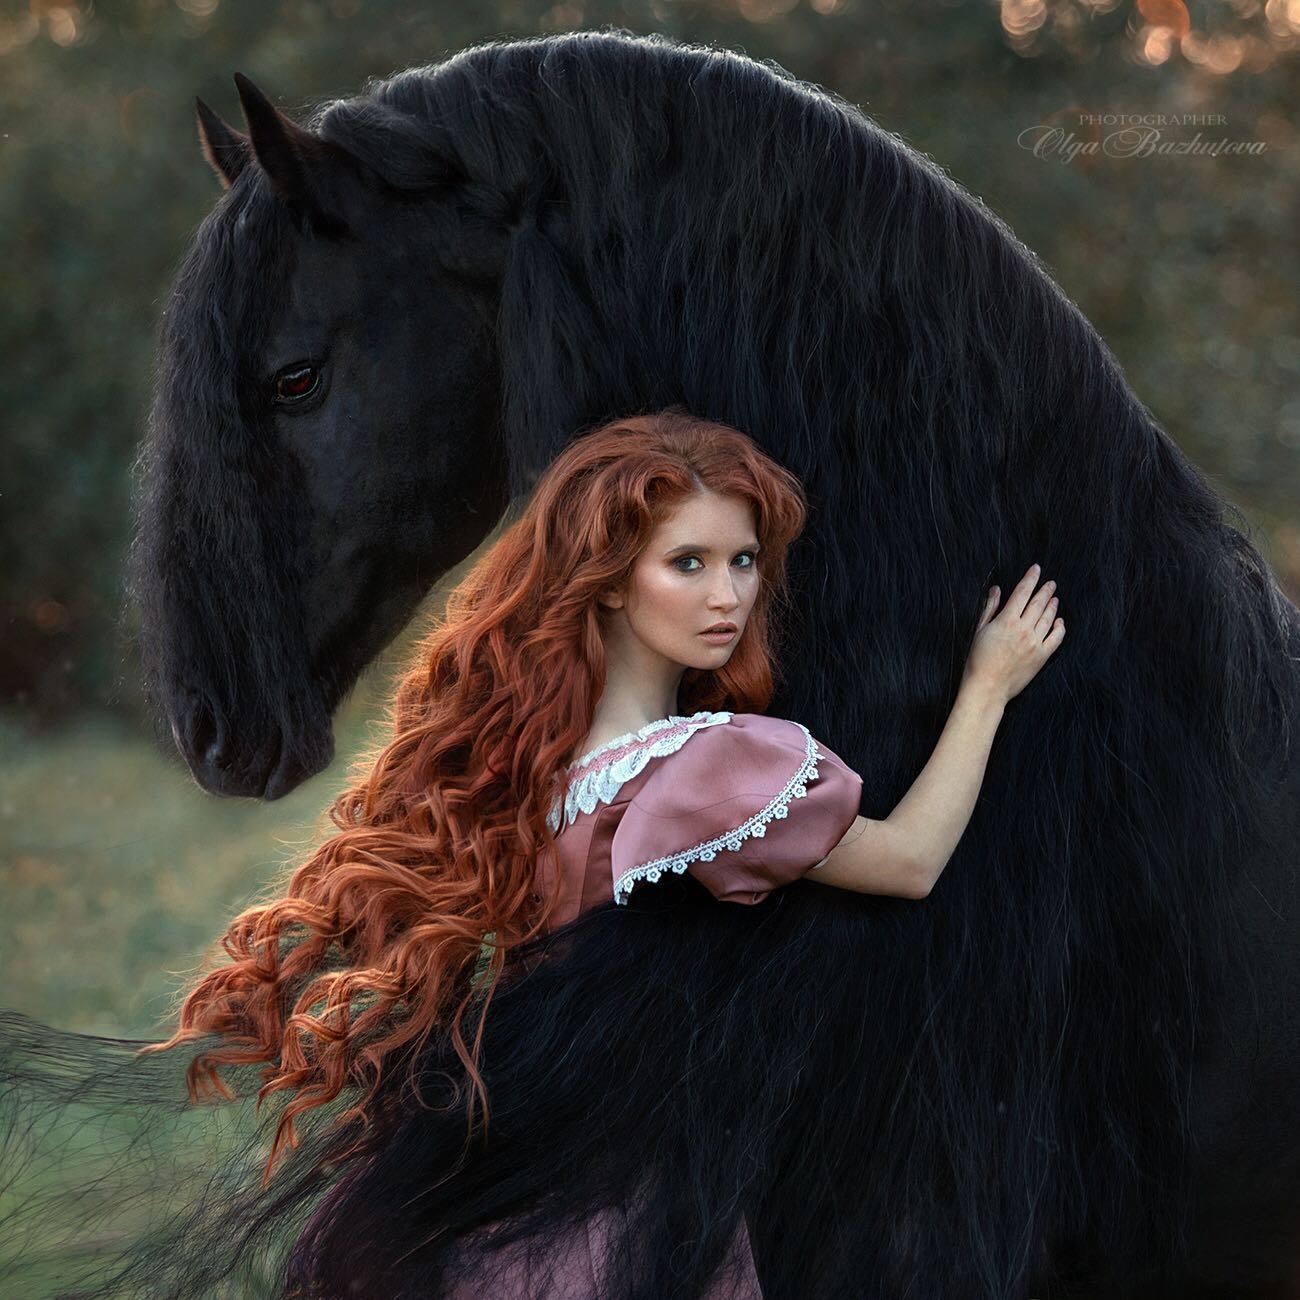 Olga Bazhutova fotografia equestre - Modelo ruiva posando com cavalo preto